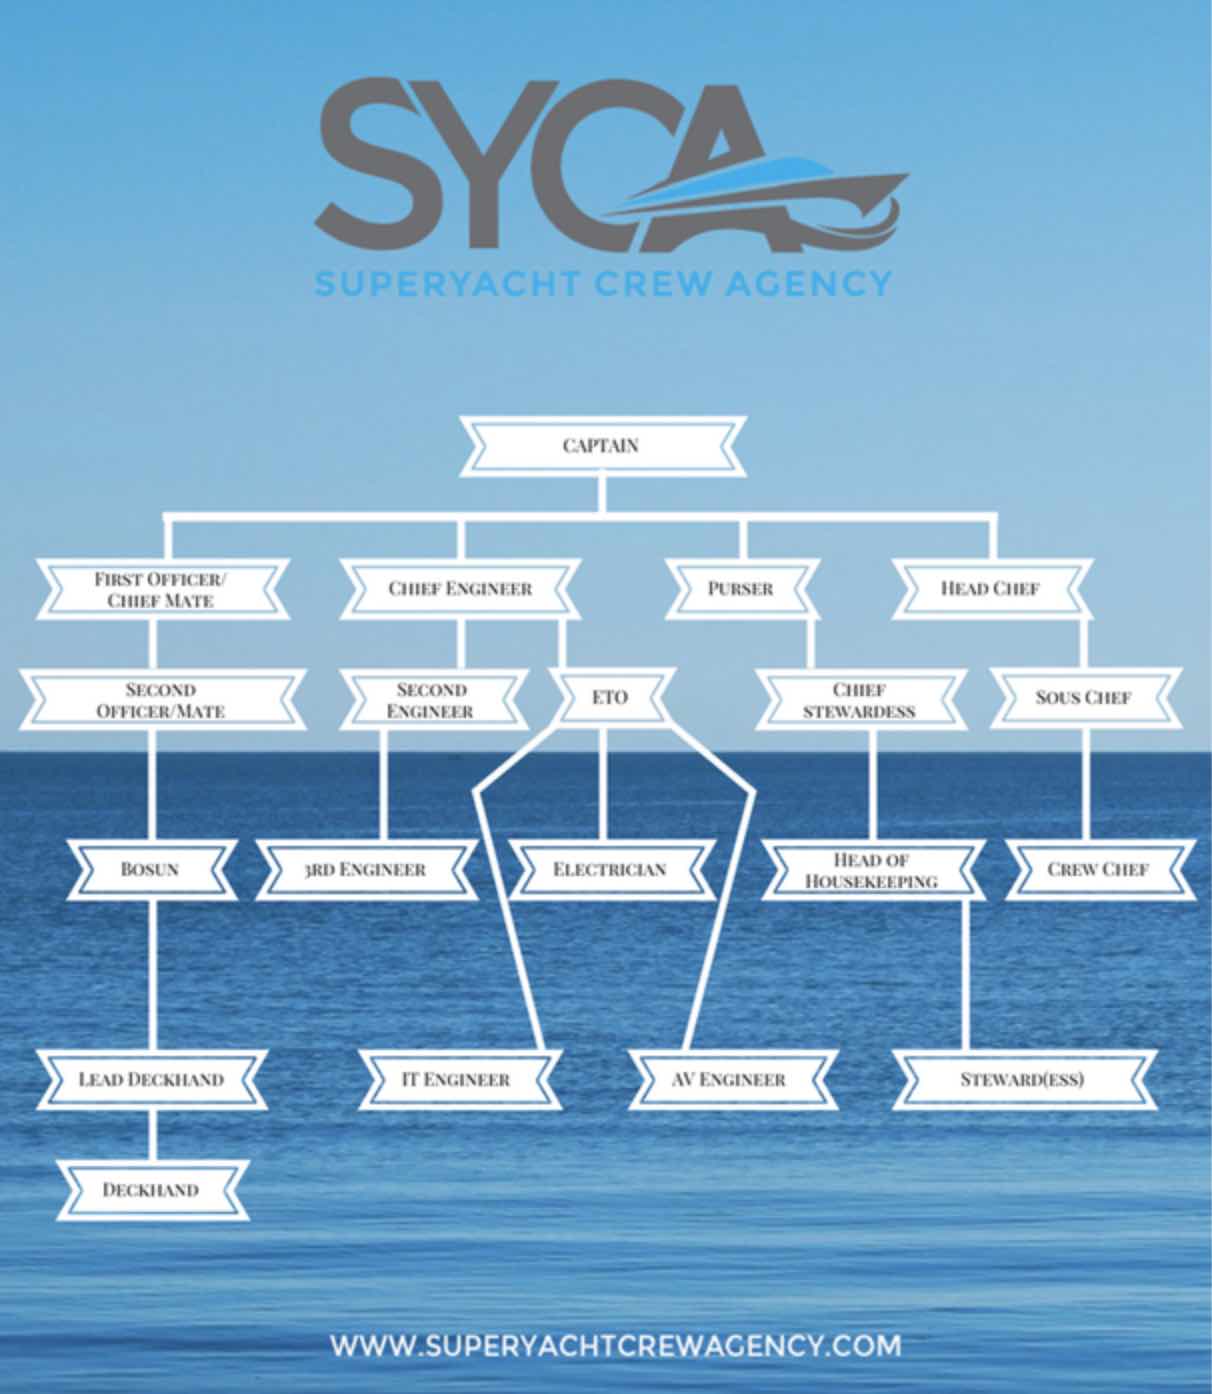 Superyacht Crew Agency 